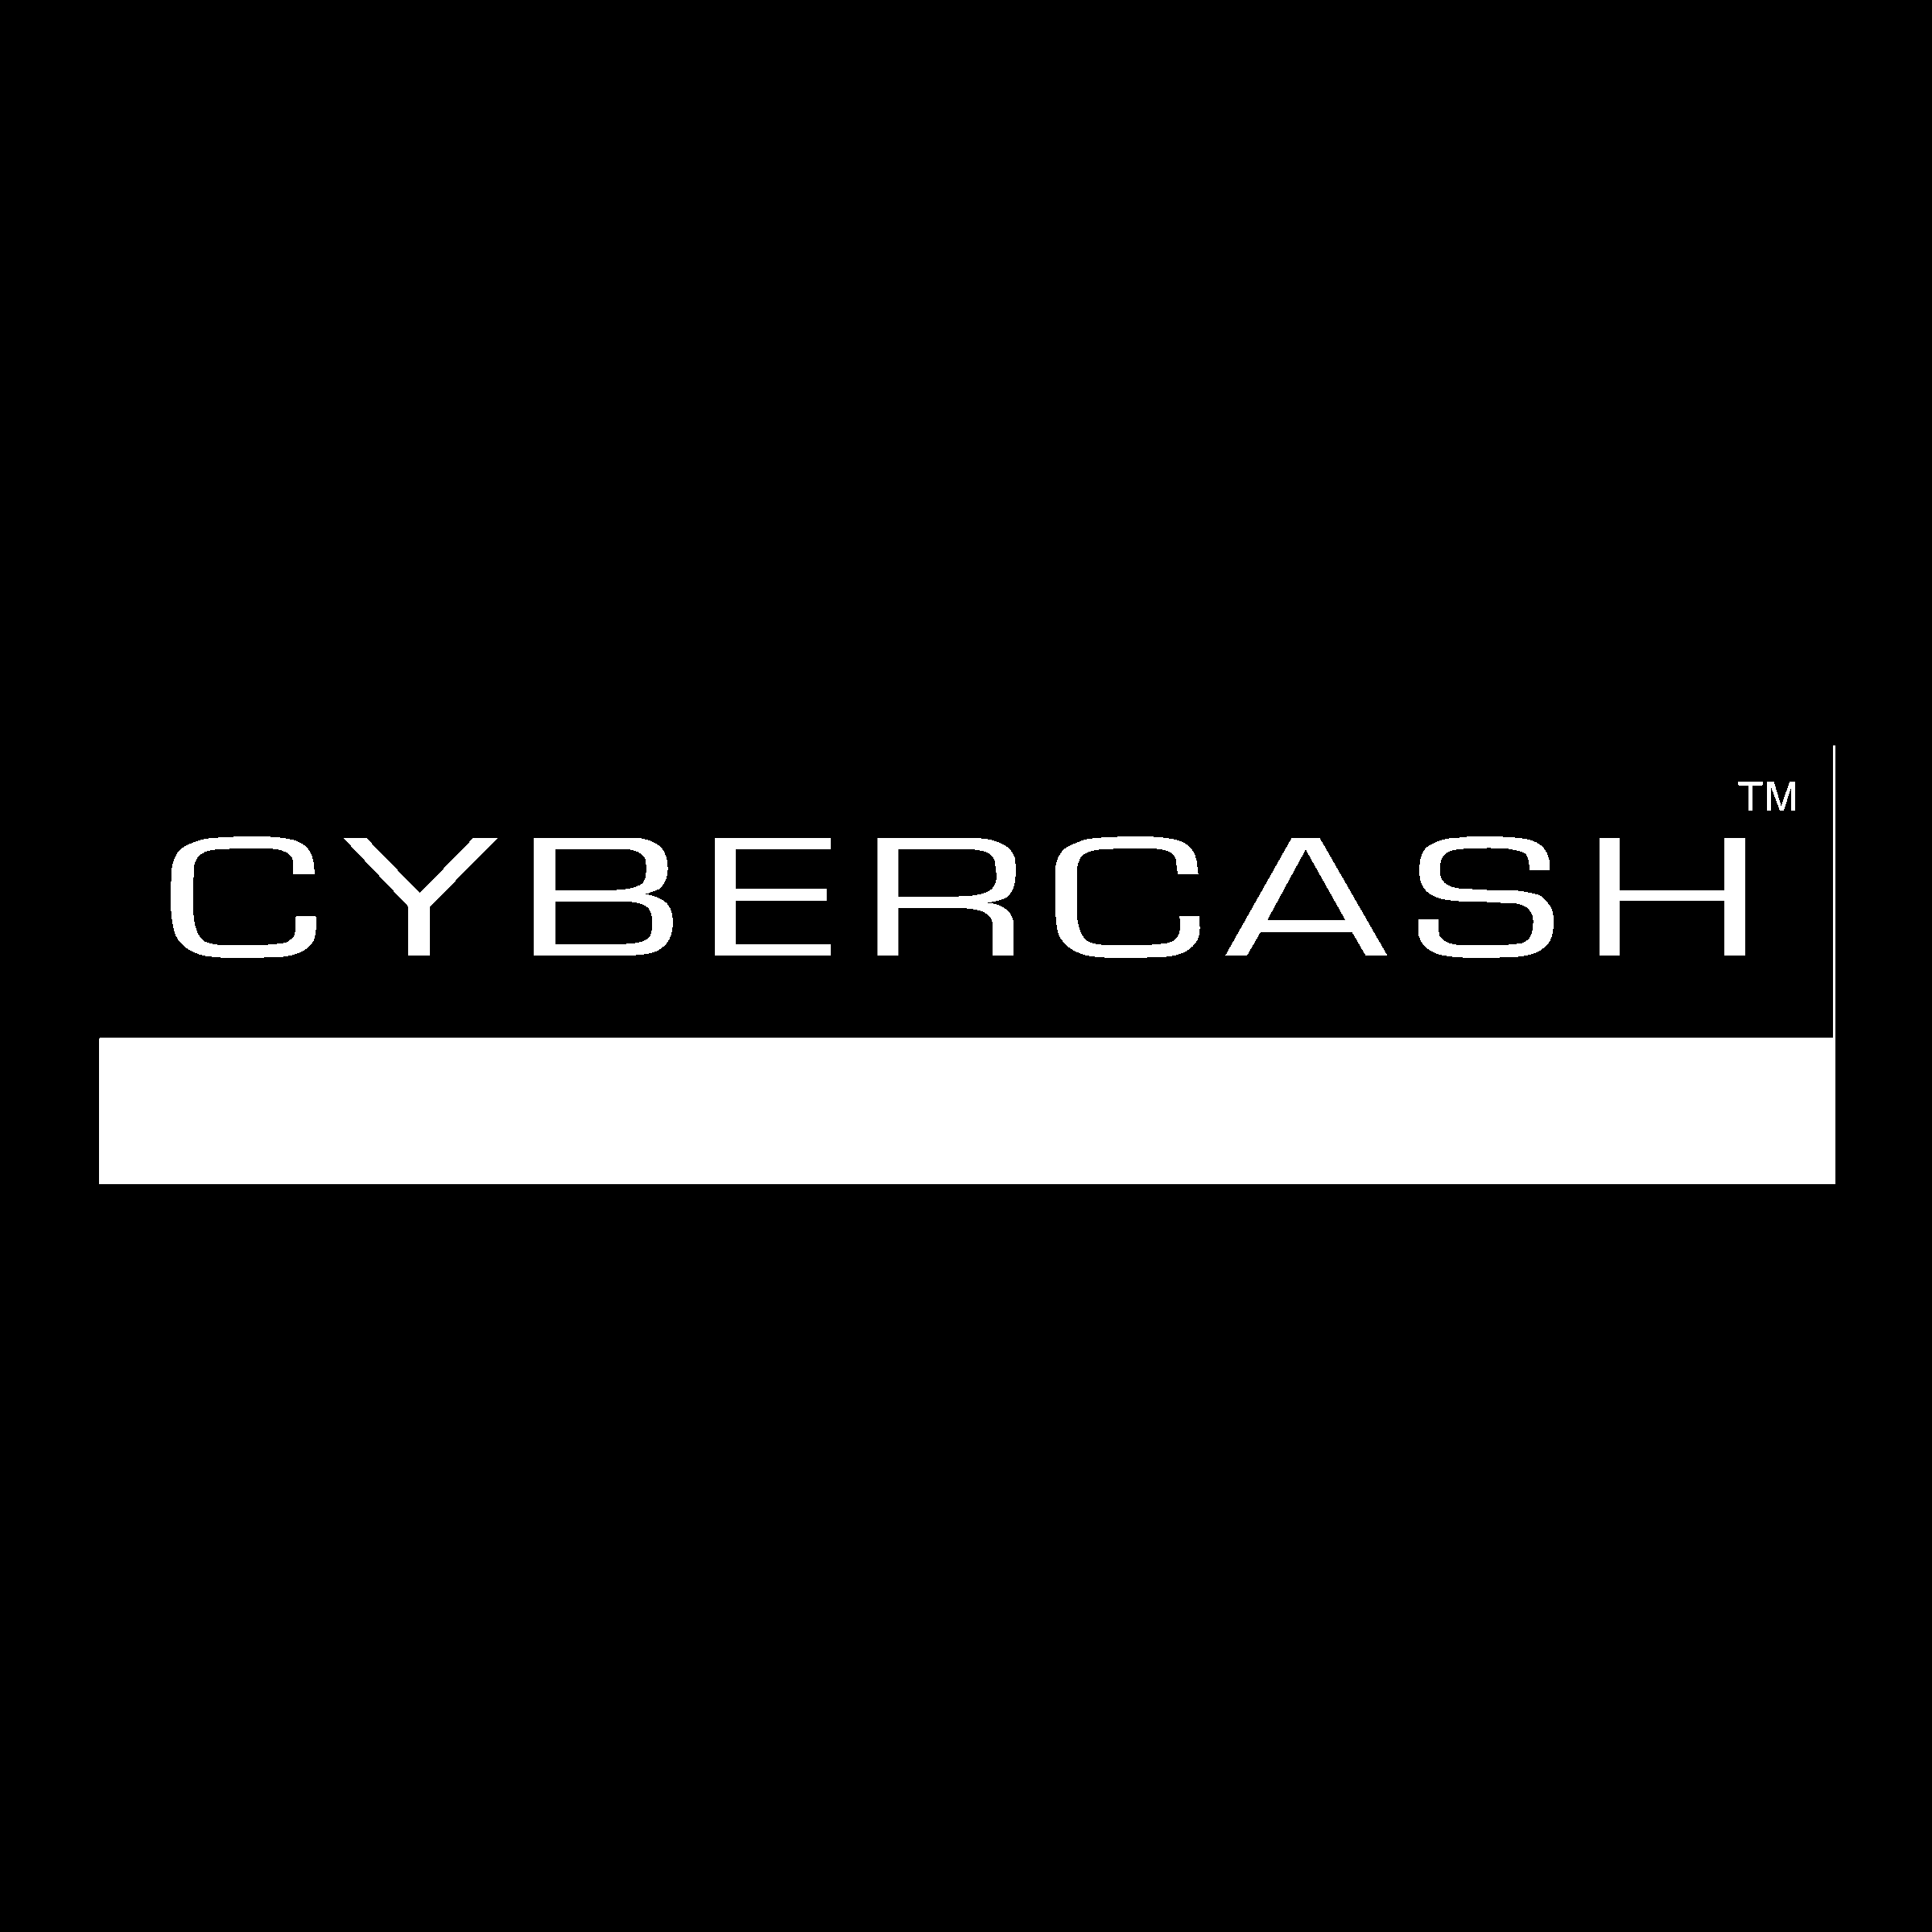 CyberCash Logo - CyberCash Logo PNG Transparent & SVG Vector - Freebie Supply